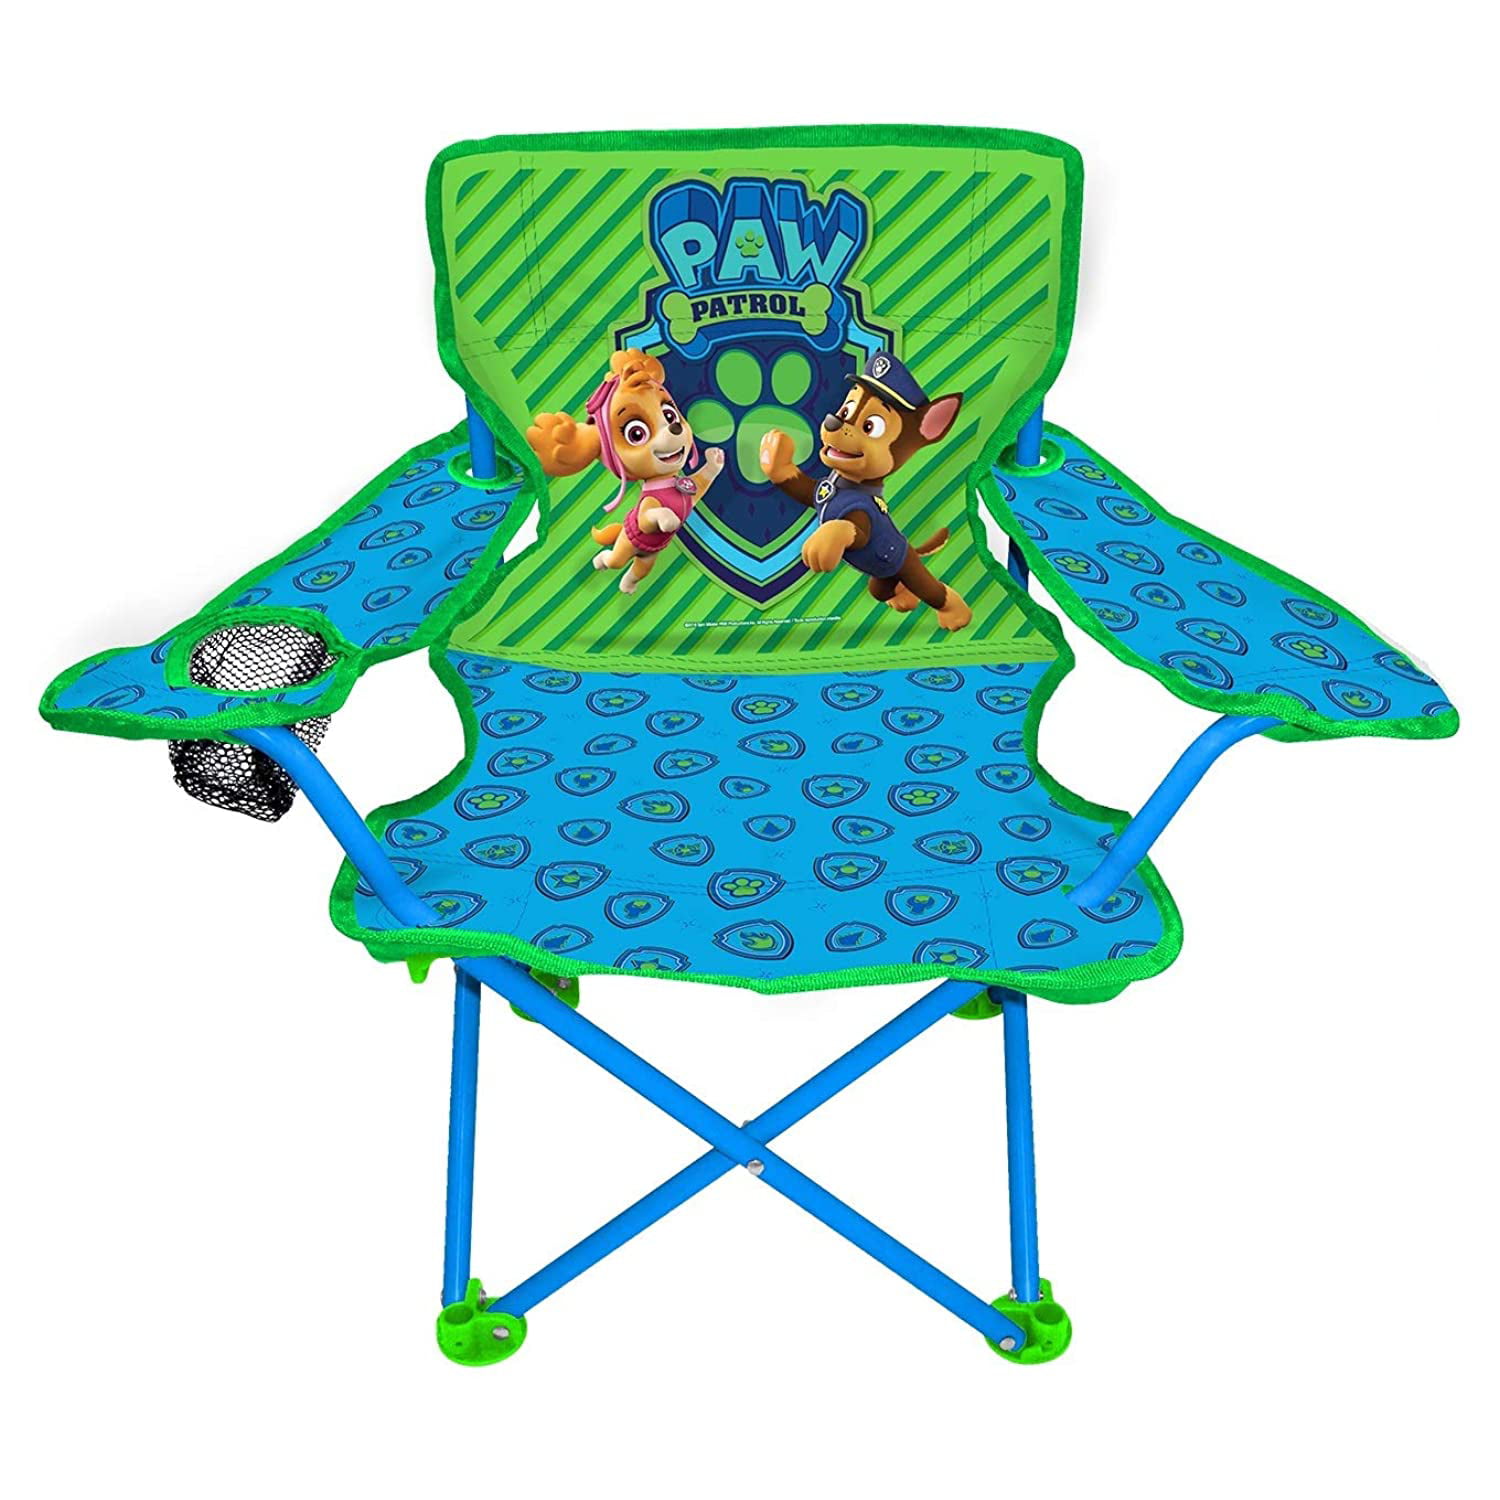 Jakks Pacific Paw Patrol Neutral Camp Chair for Kids